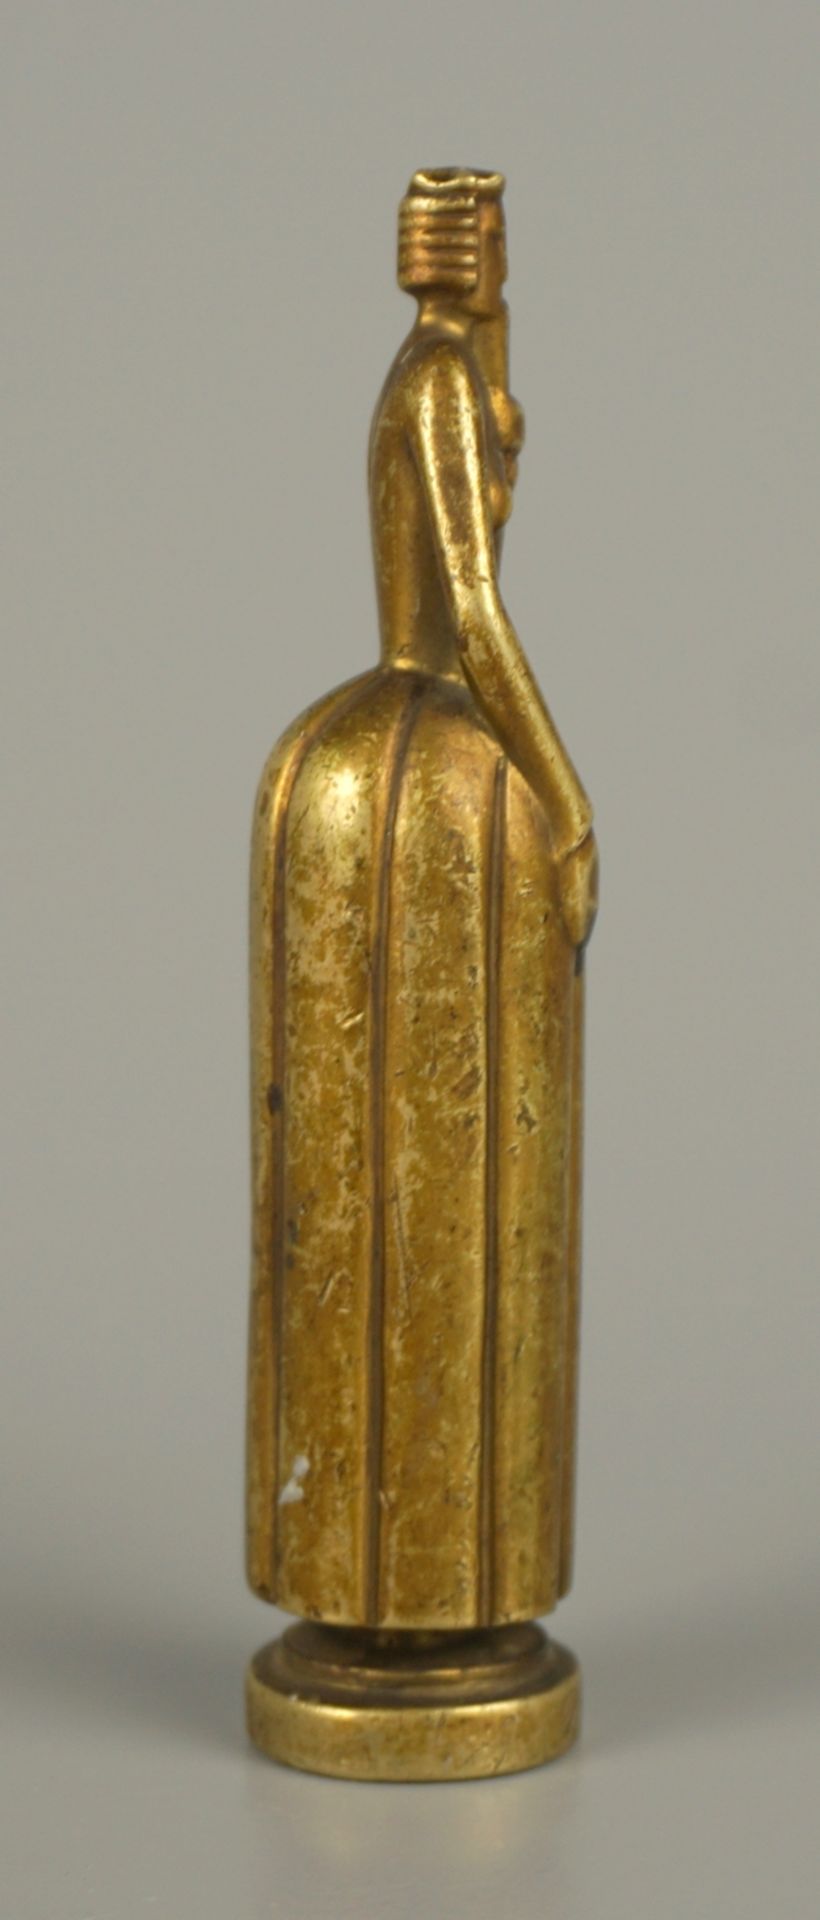 Petschaft "The Lady", bronze, Art Deco, 1920s/1930s. - Image 3 of 6